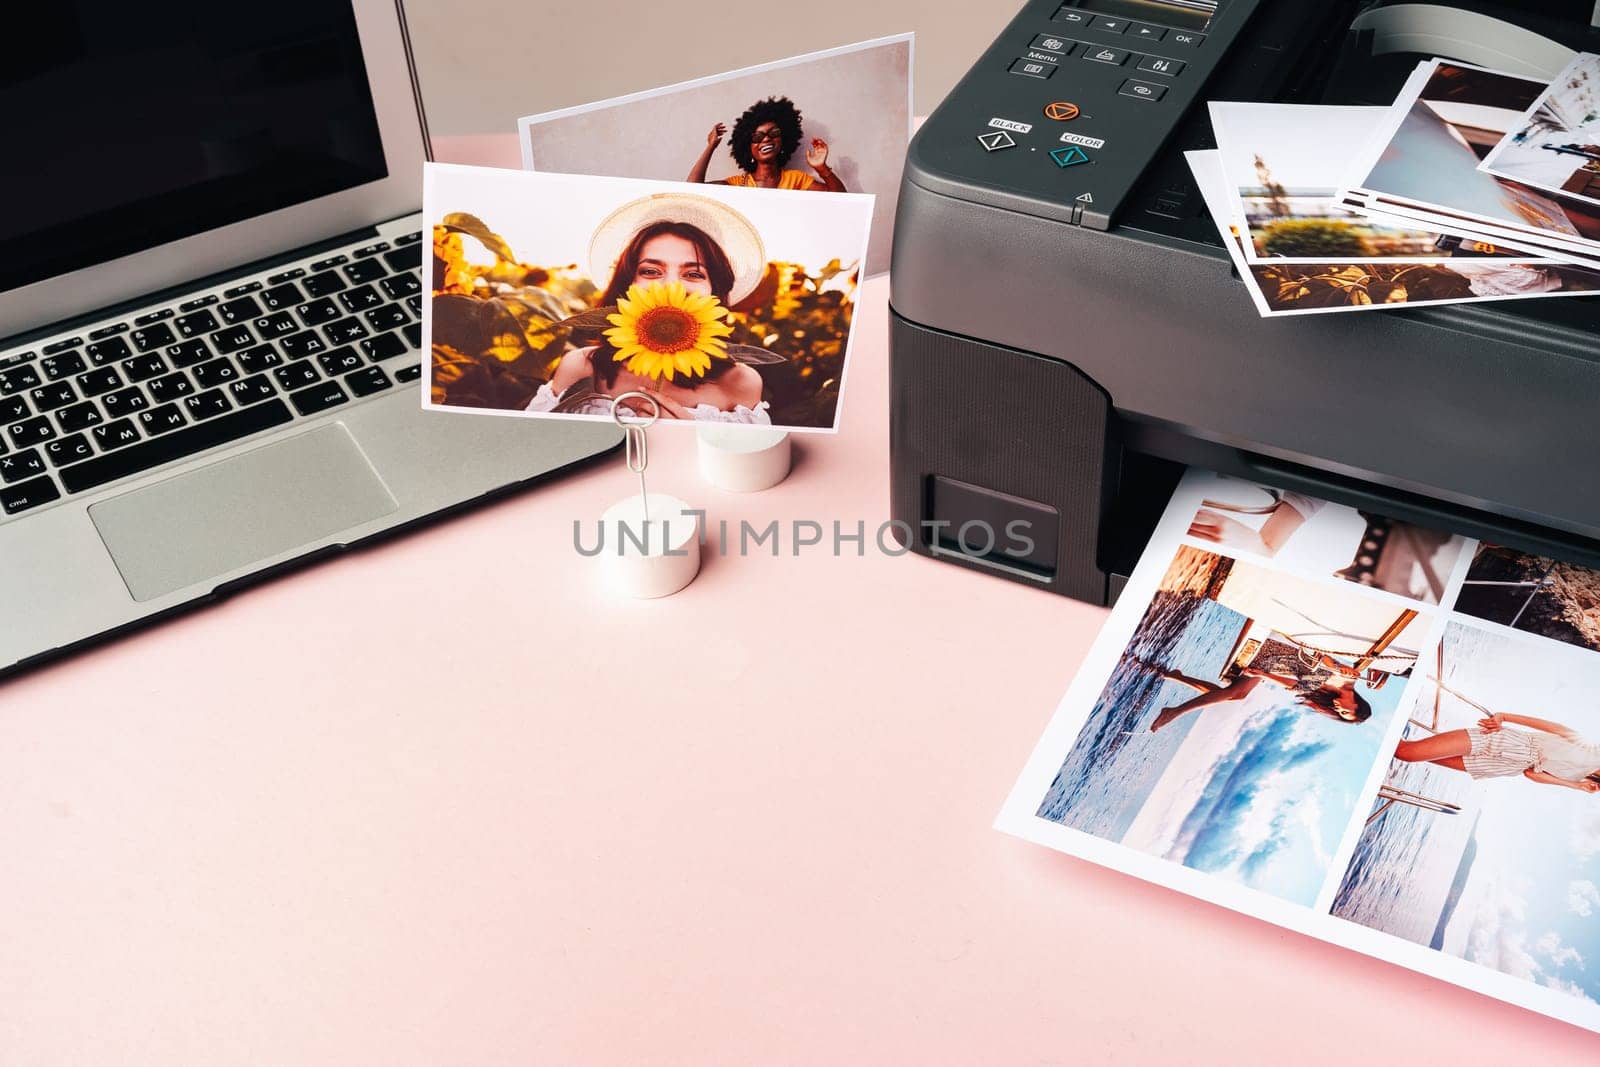 Computer laptop and printer on table. Printing photos by Fabrikasimf